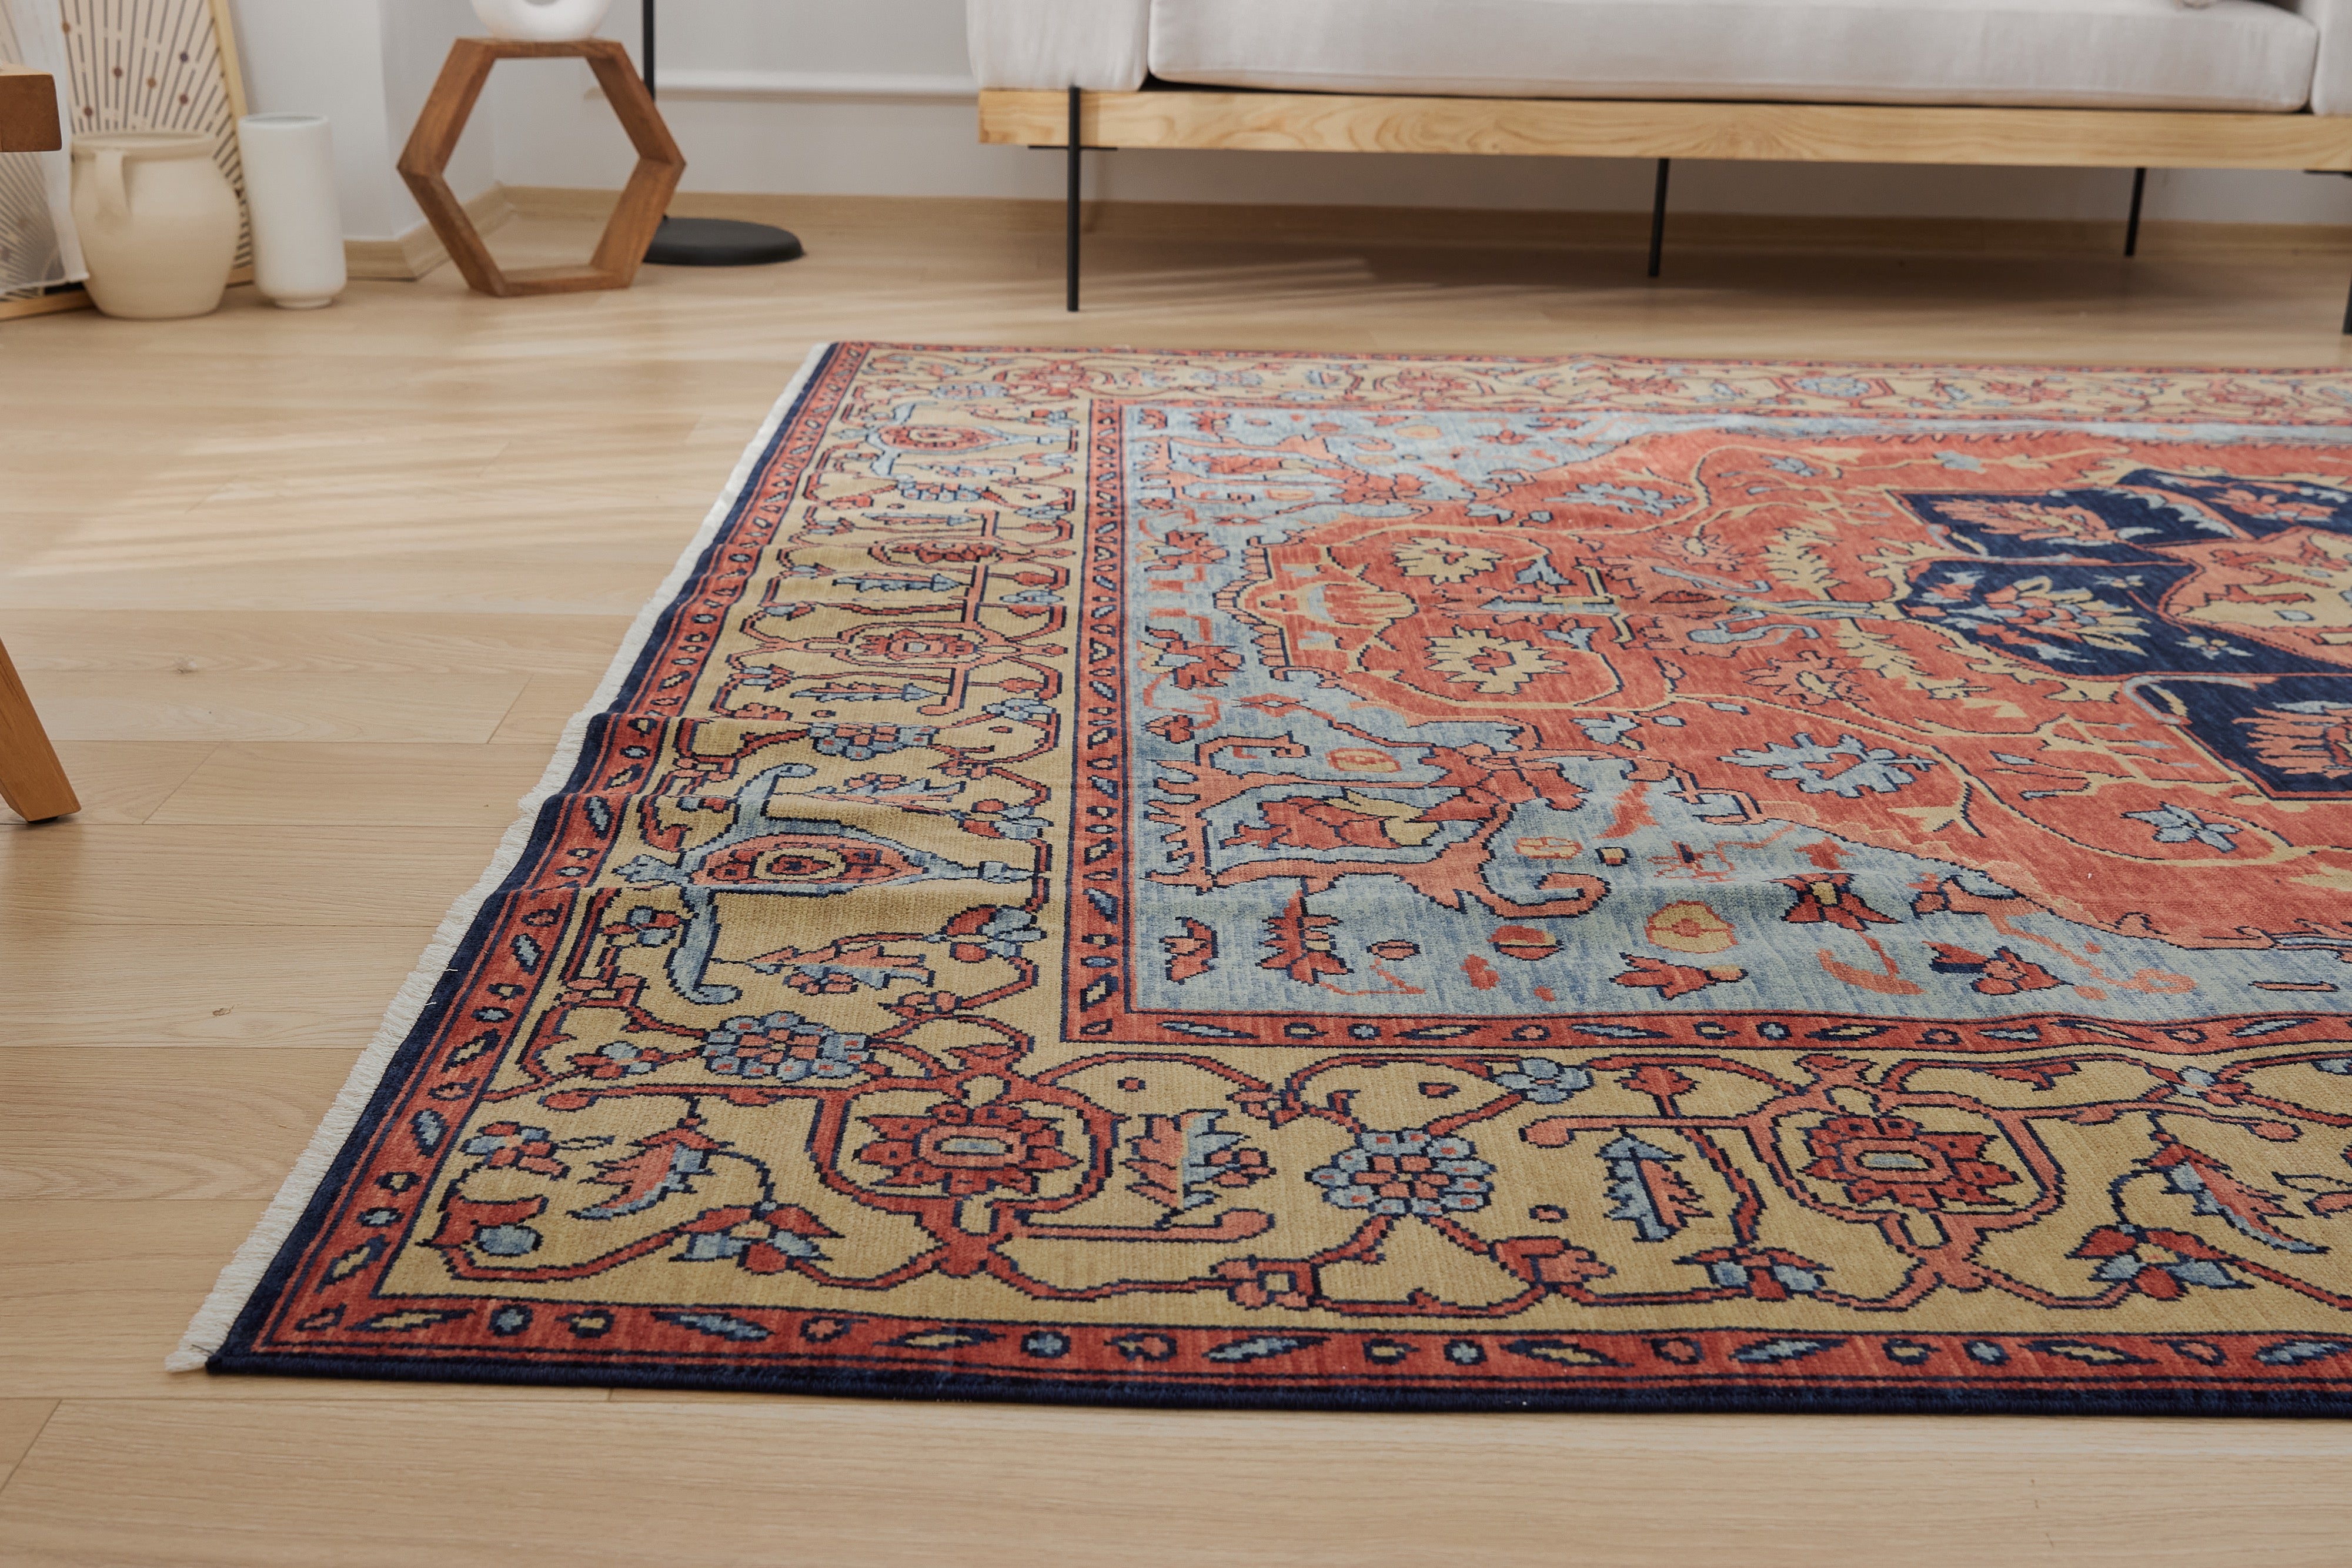 Contemporary Vintage Fusion - Soleil's Luxurious Carpet Craft